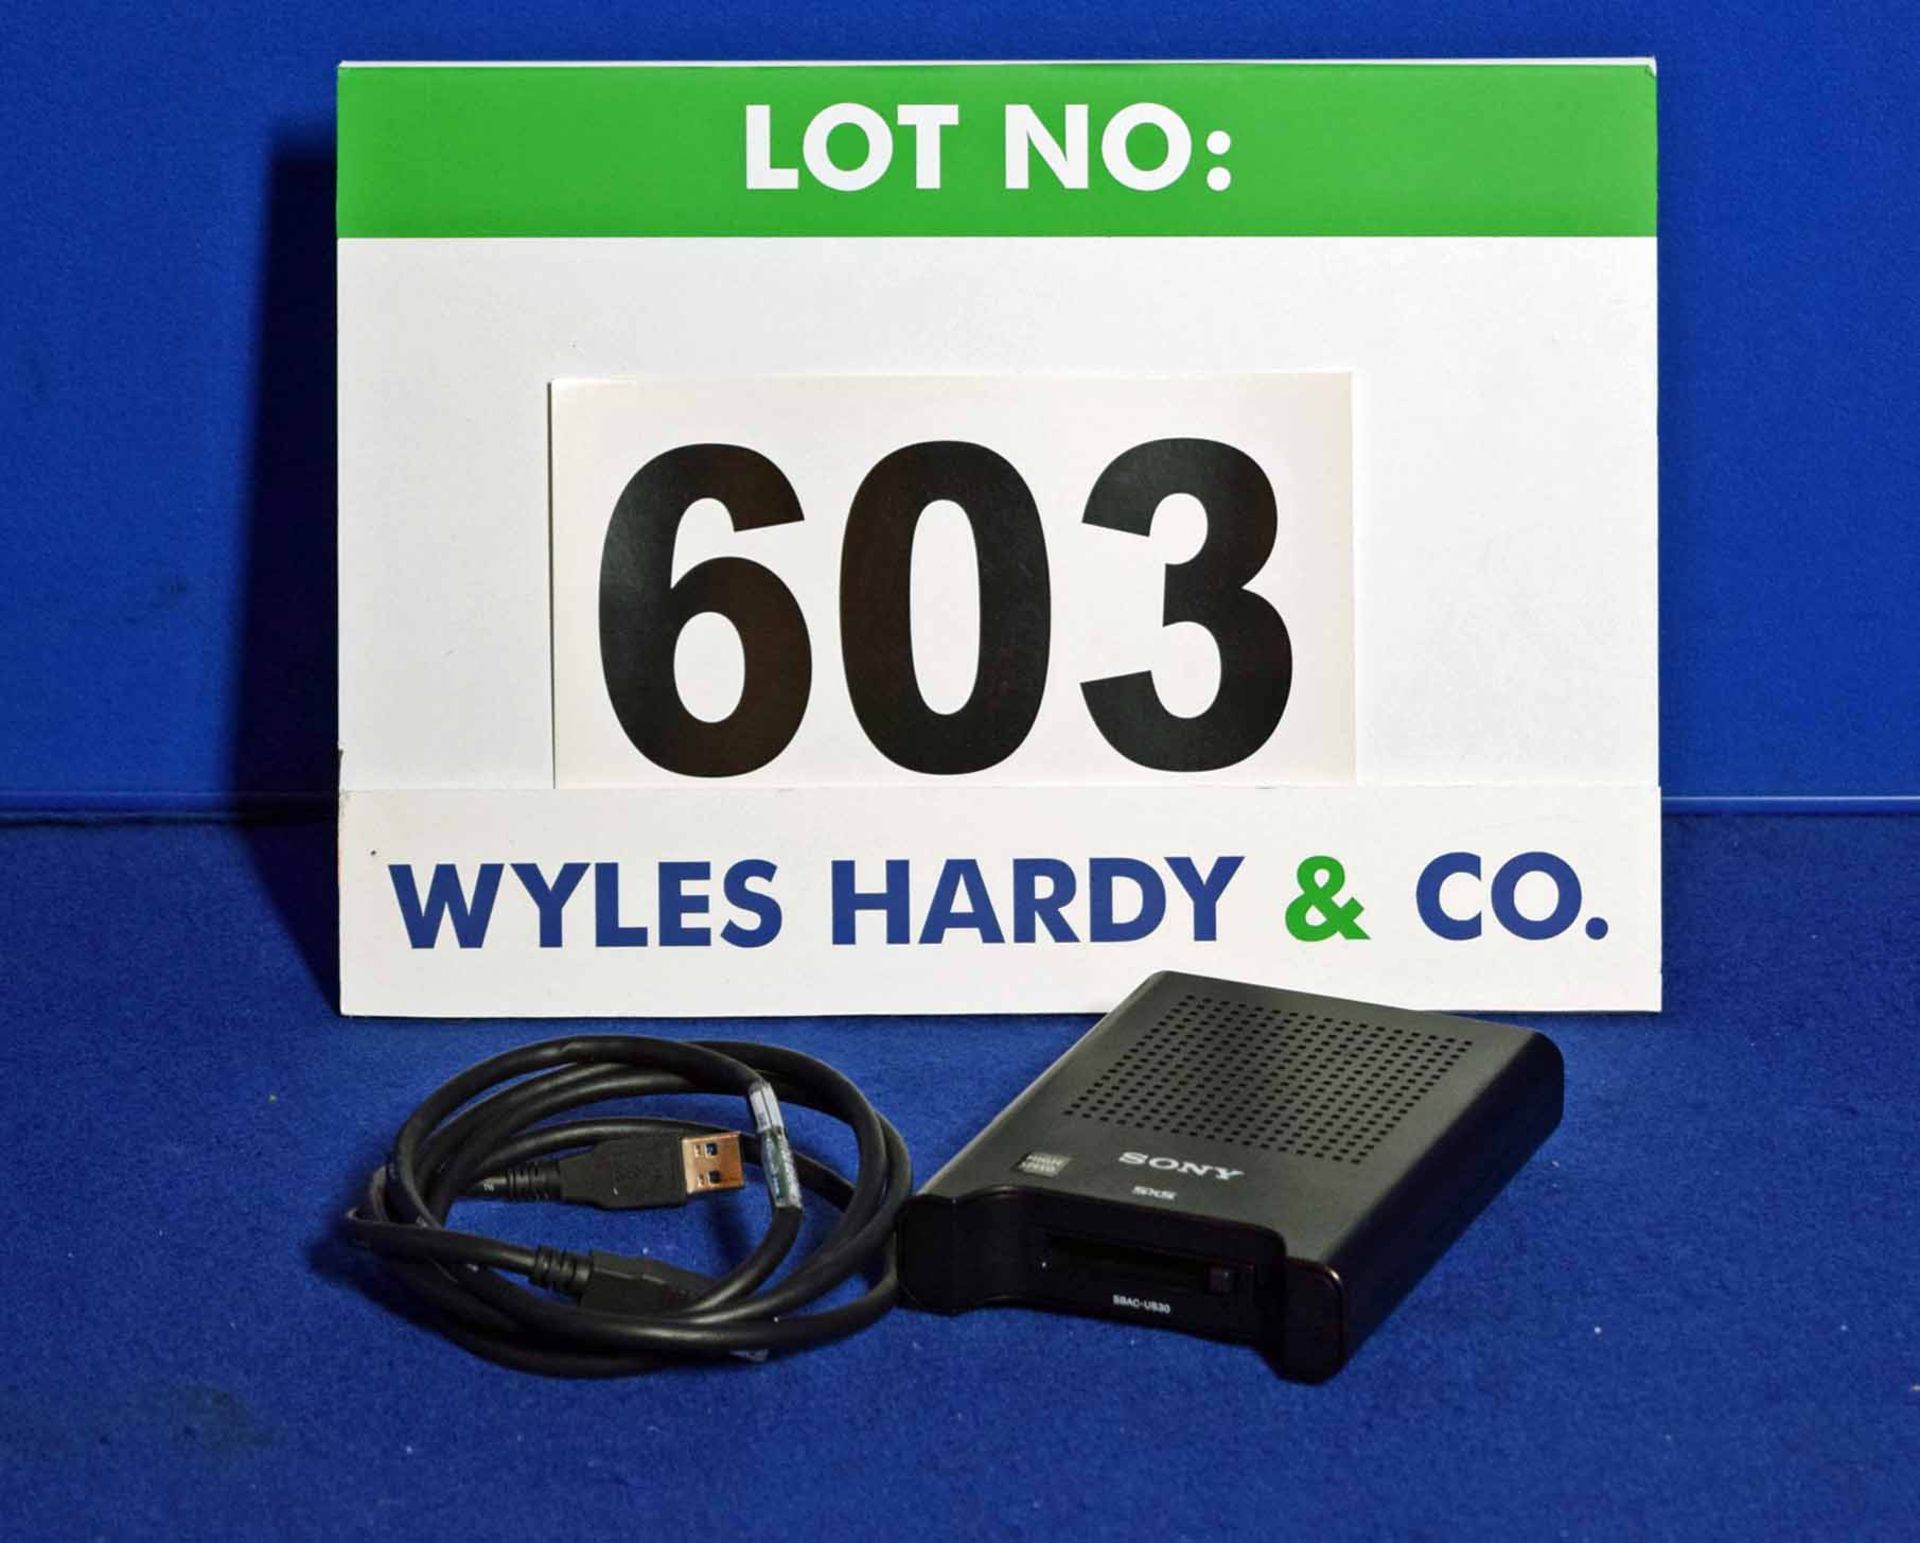 A SONY SBAC-US30 SXS Pro Memory USB 3.0 Card Reader/Writer, Serial No. 3854